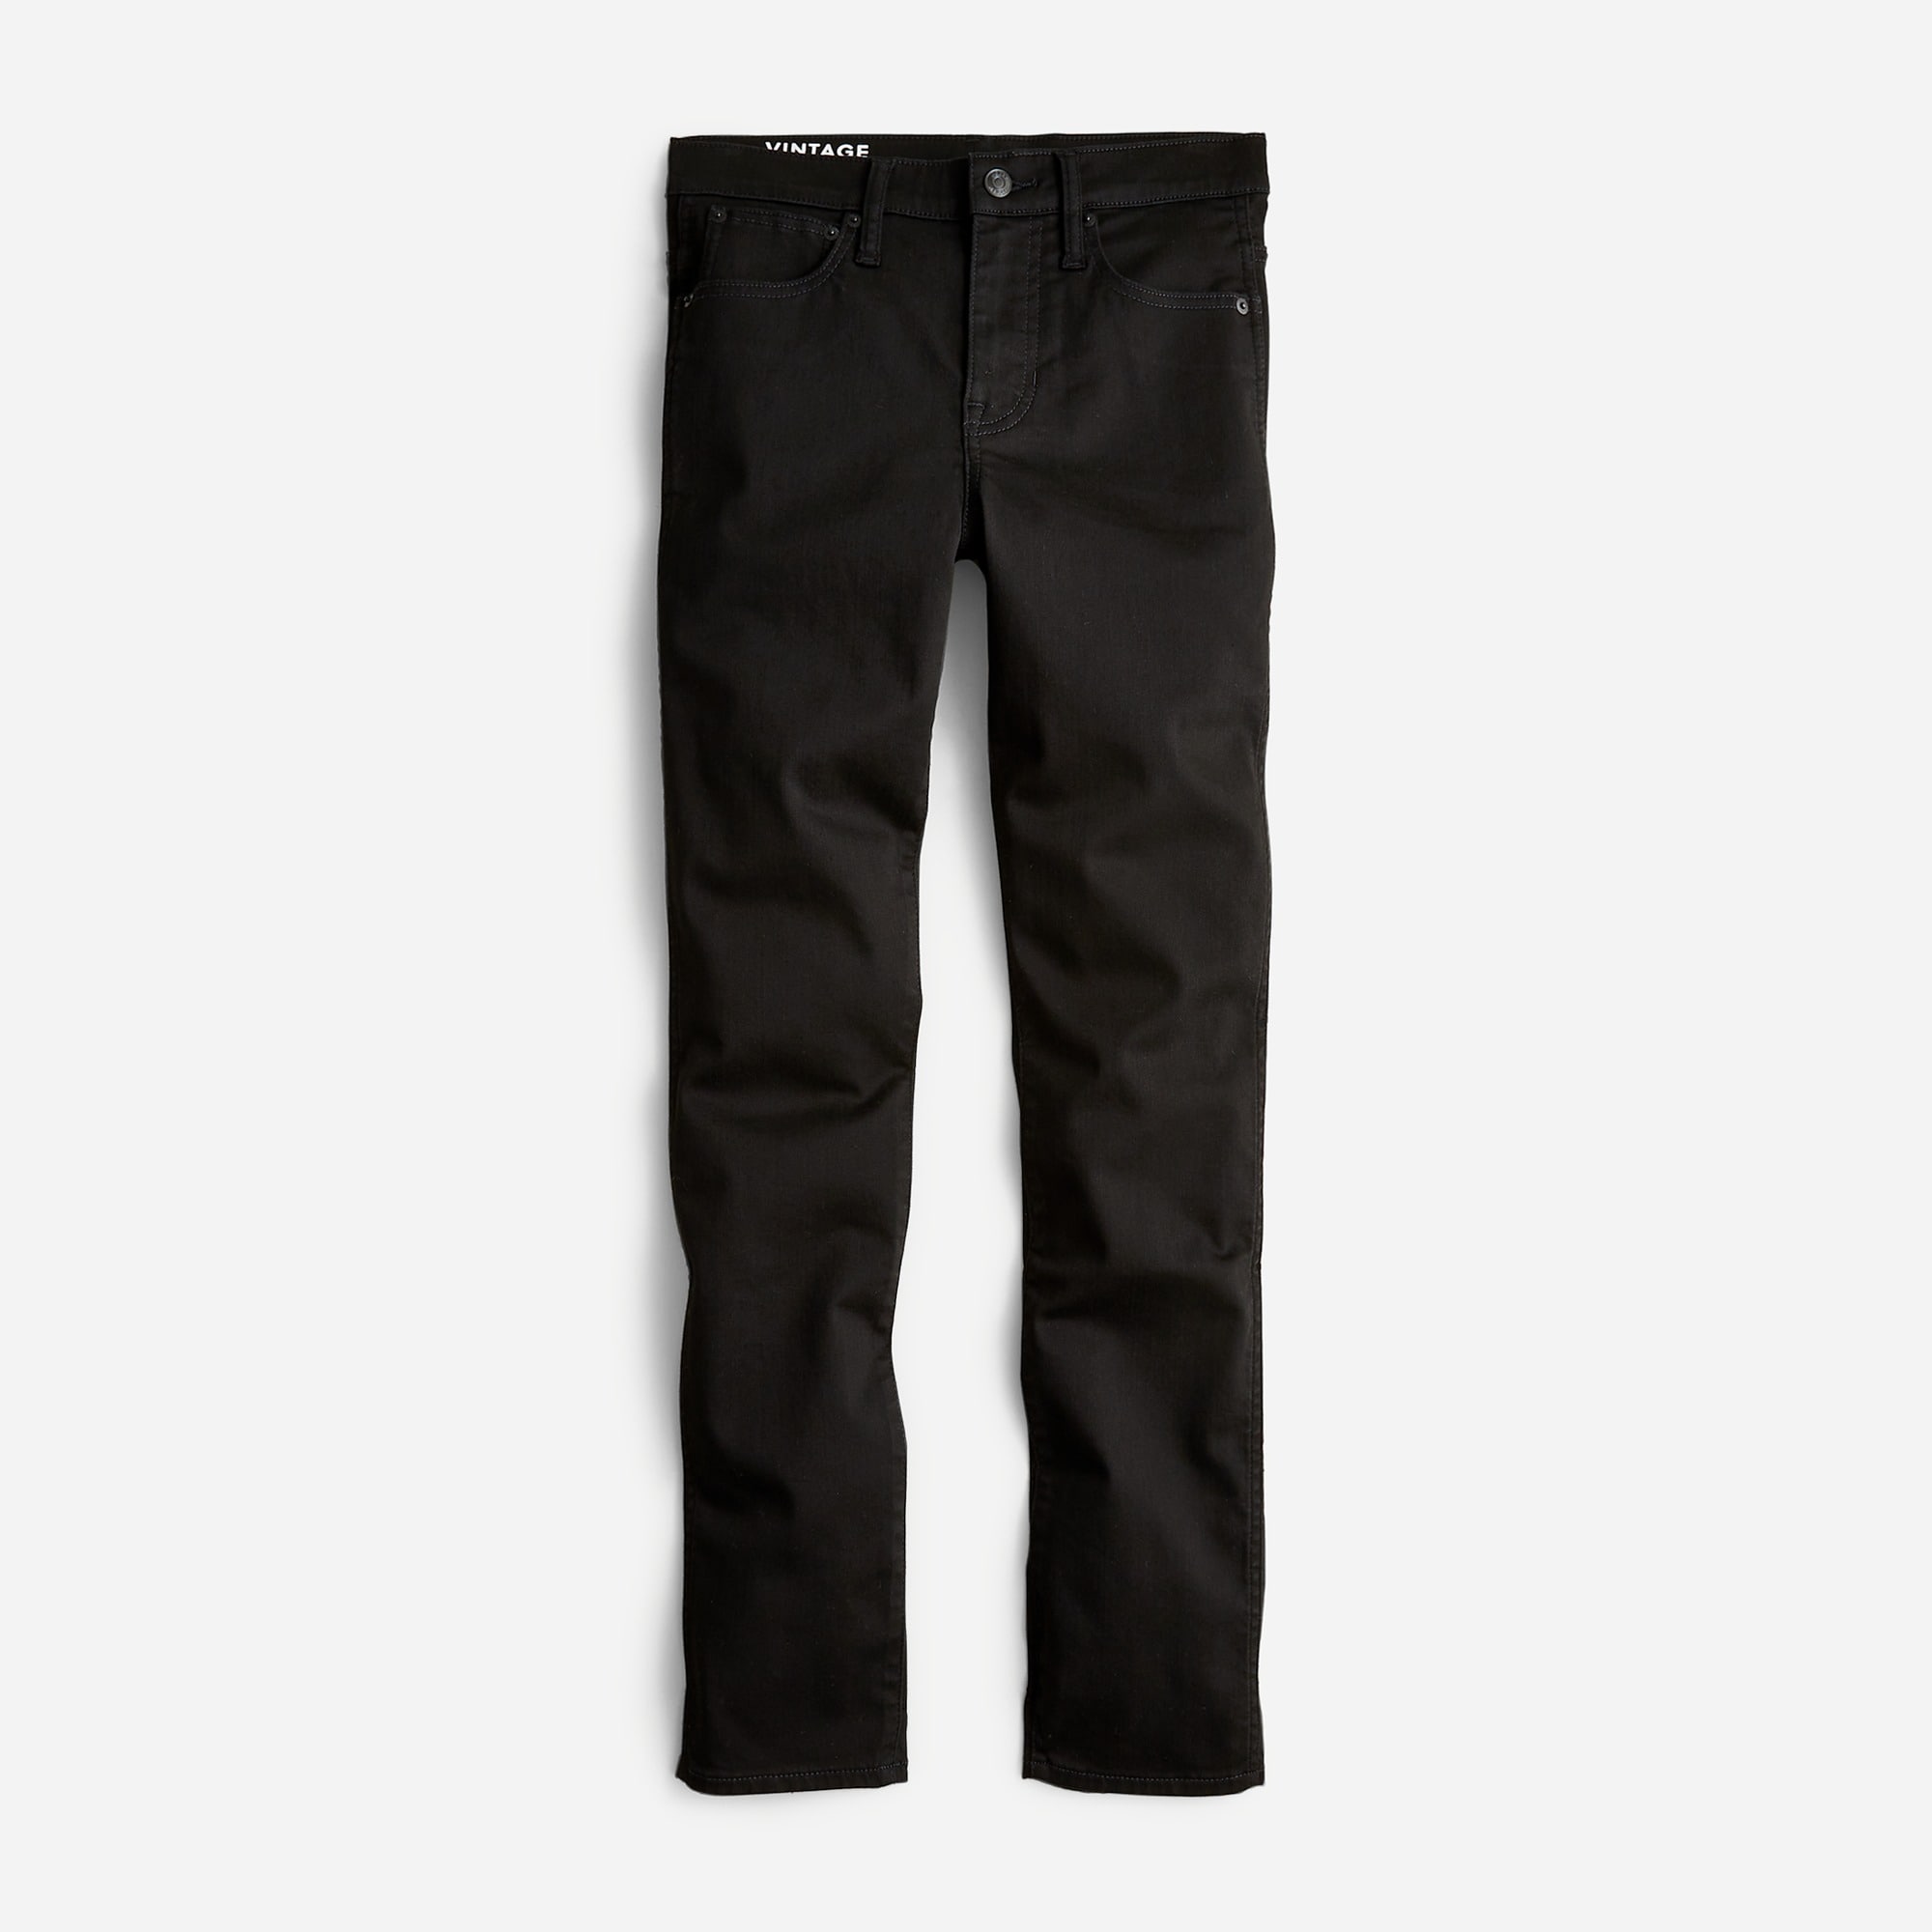  Petite 9" mid-rise vintage slim-straight jean in Stay Black wash